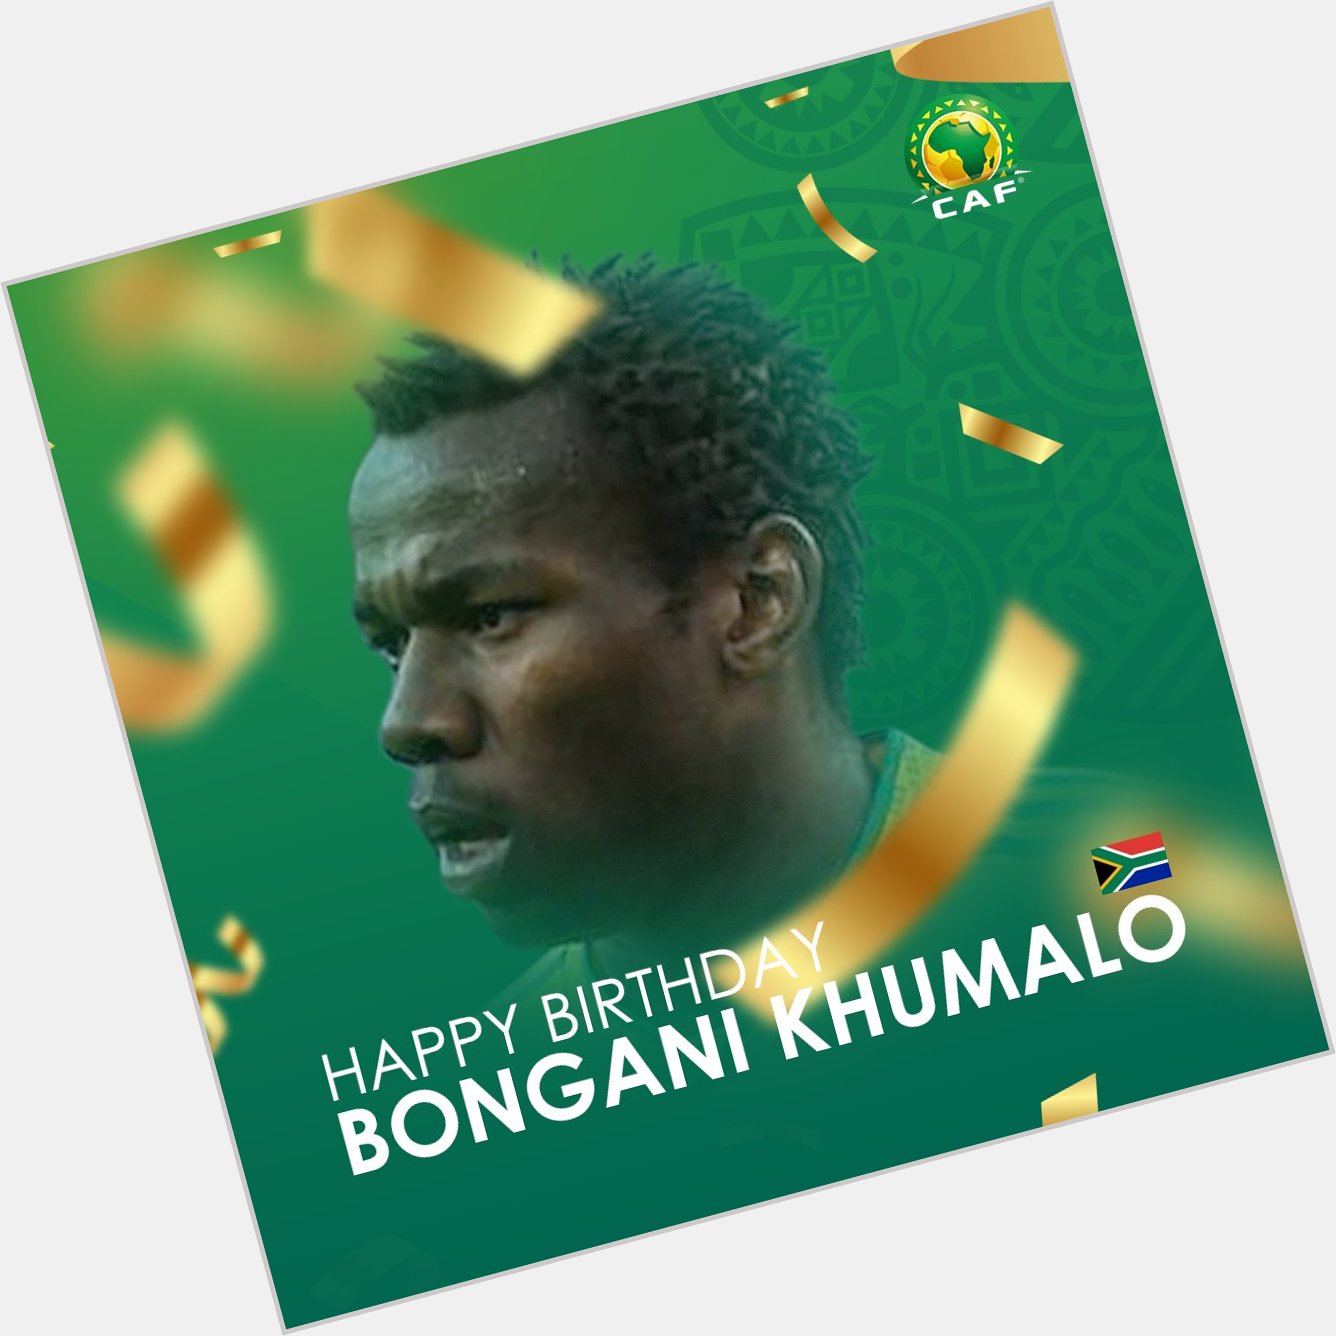   Happy Birthday to & defender Bongani Khumalo! Send him your best wishes! 